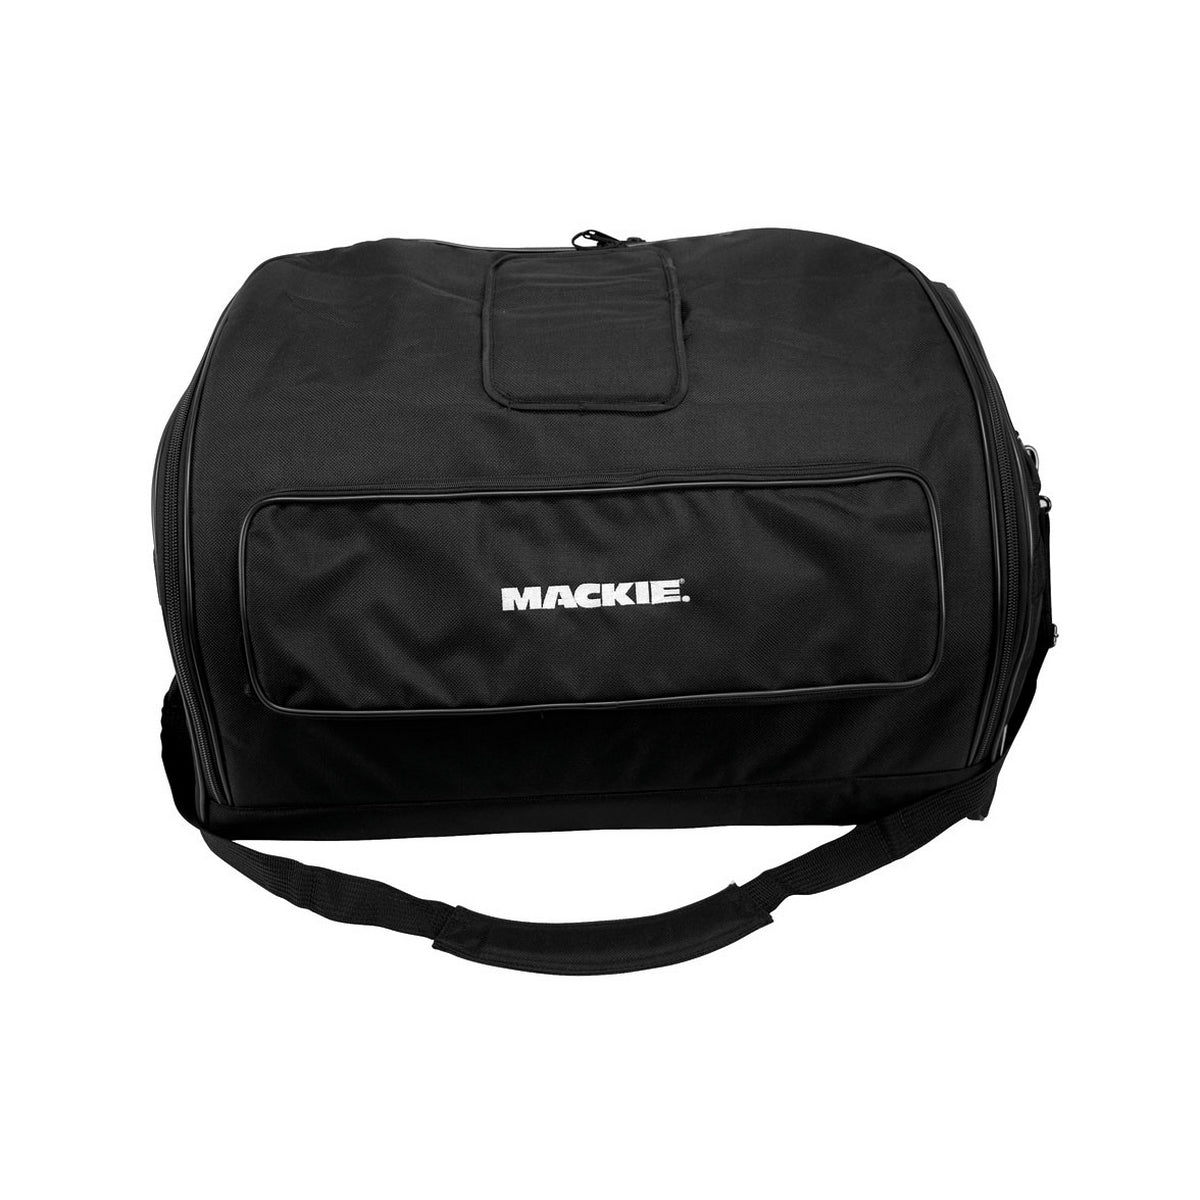 Mackie SRM450 / C300Z Bag | Speaker Bag for SRM450 & C300Z